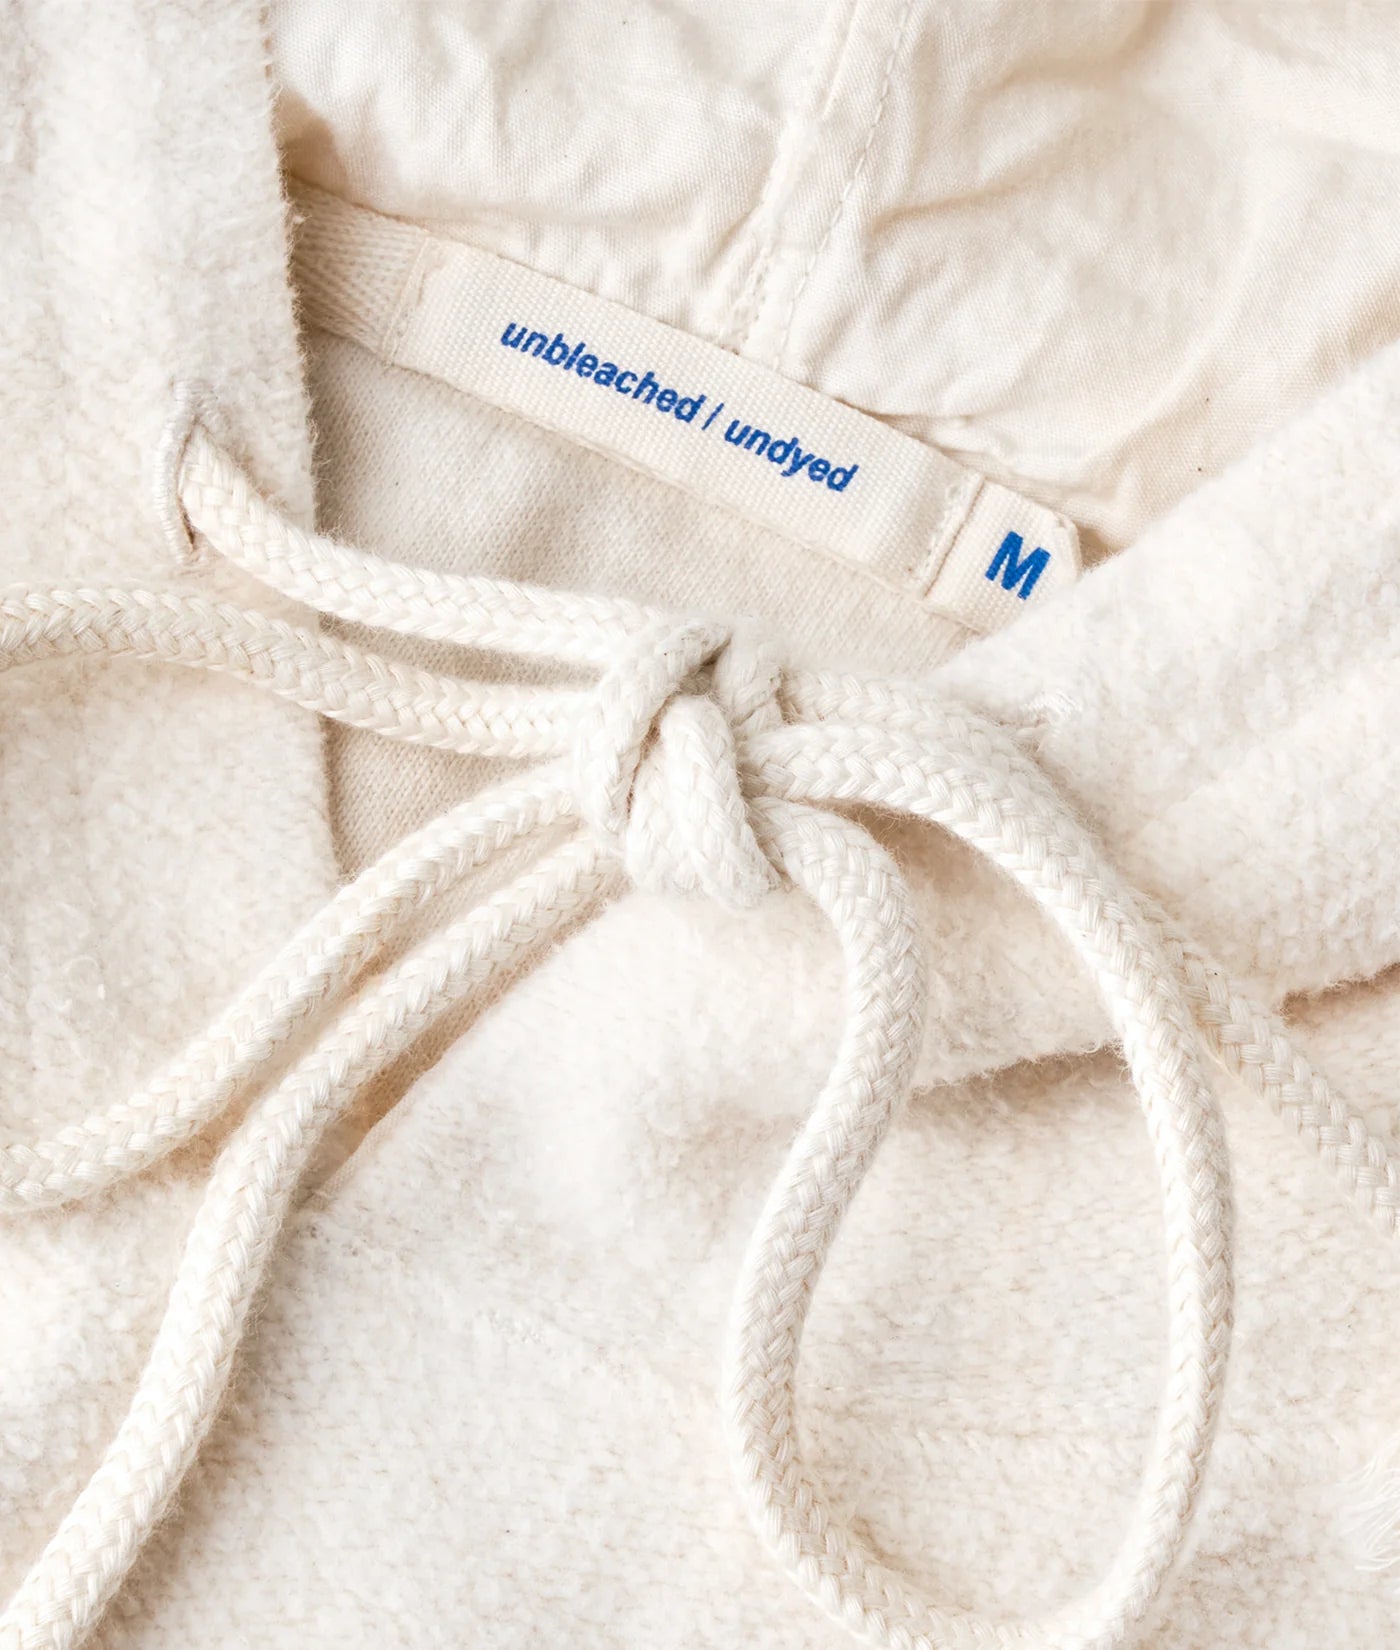 Nagda Sweatshirt - Periwinkle, 100% Organic Cotton